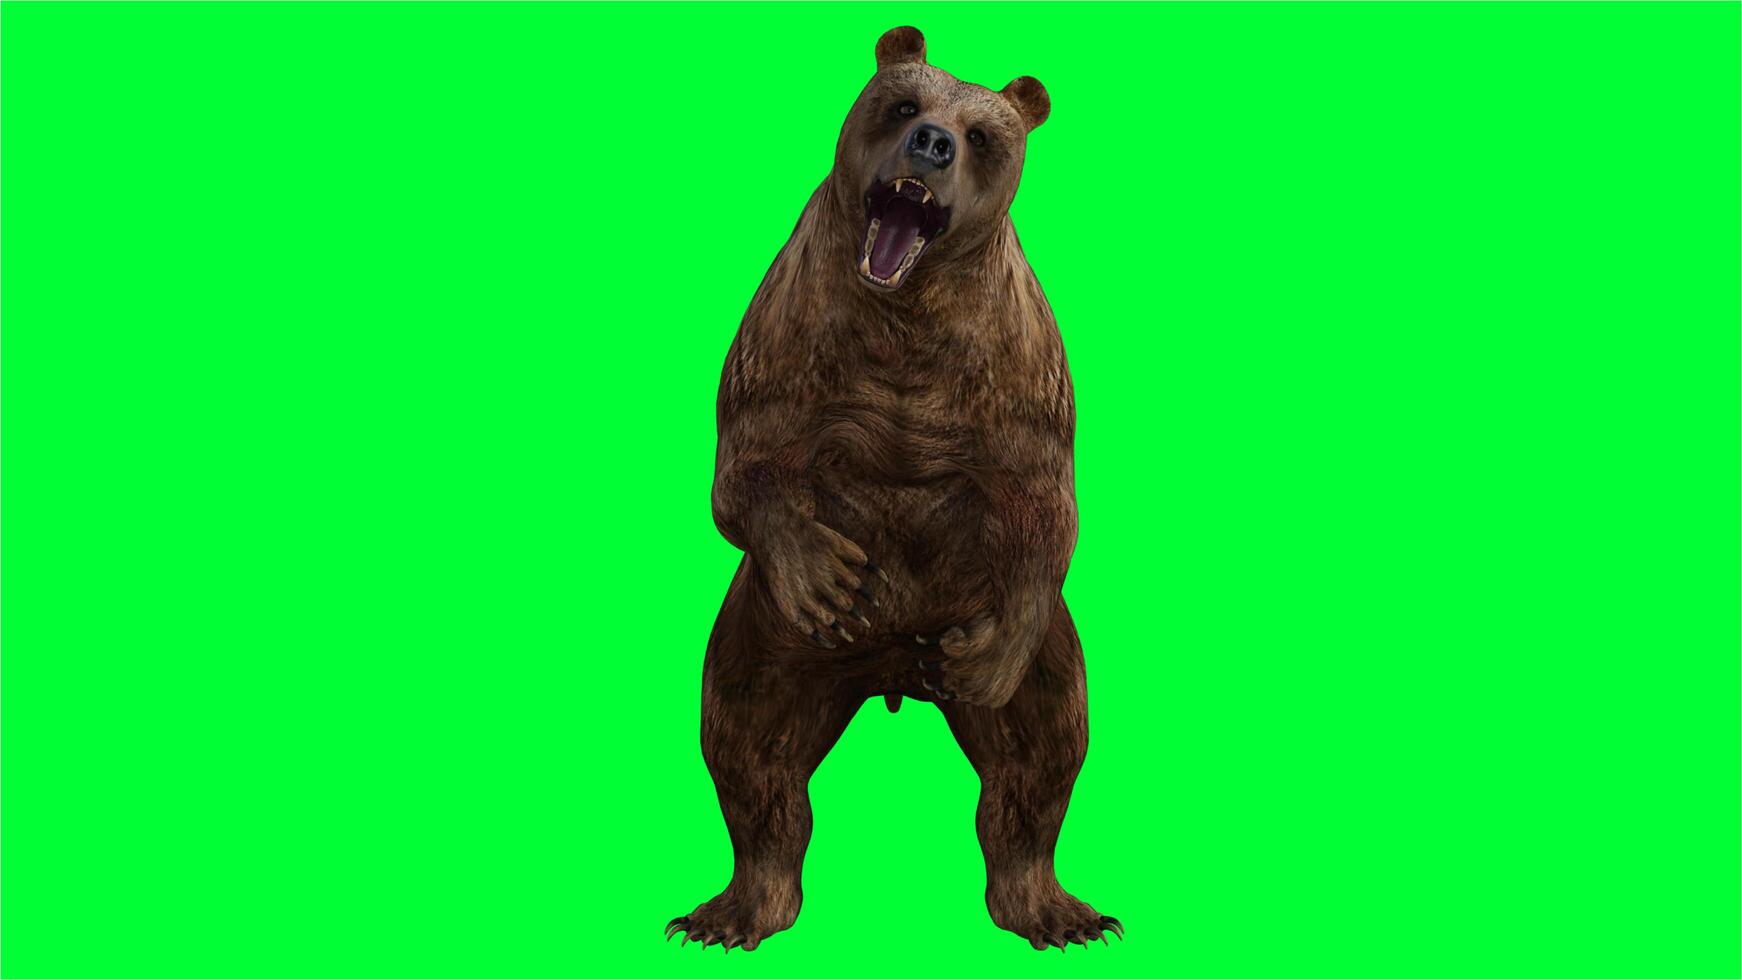 brun Björn på grön skärm foto